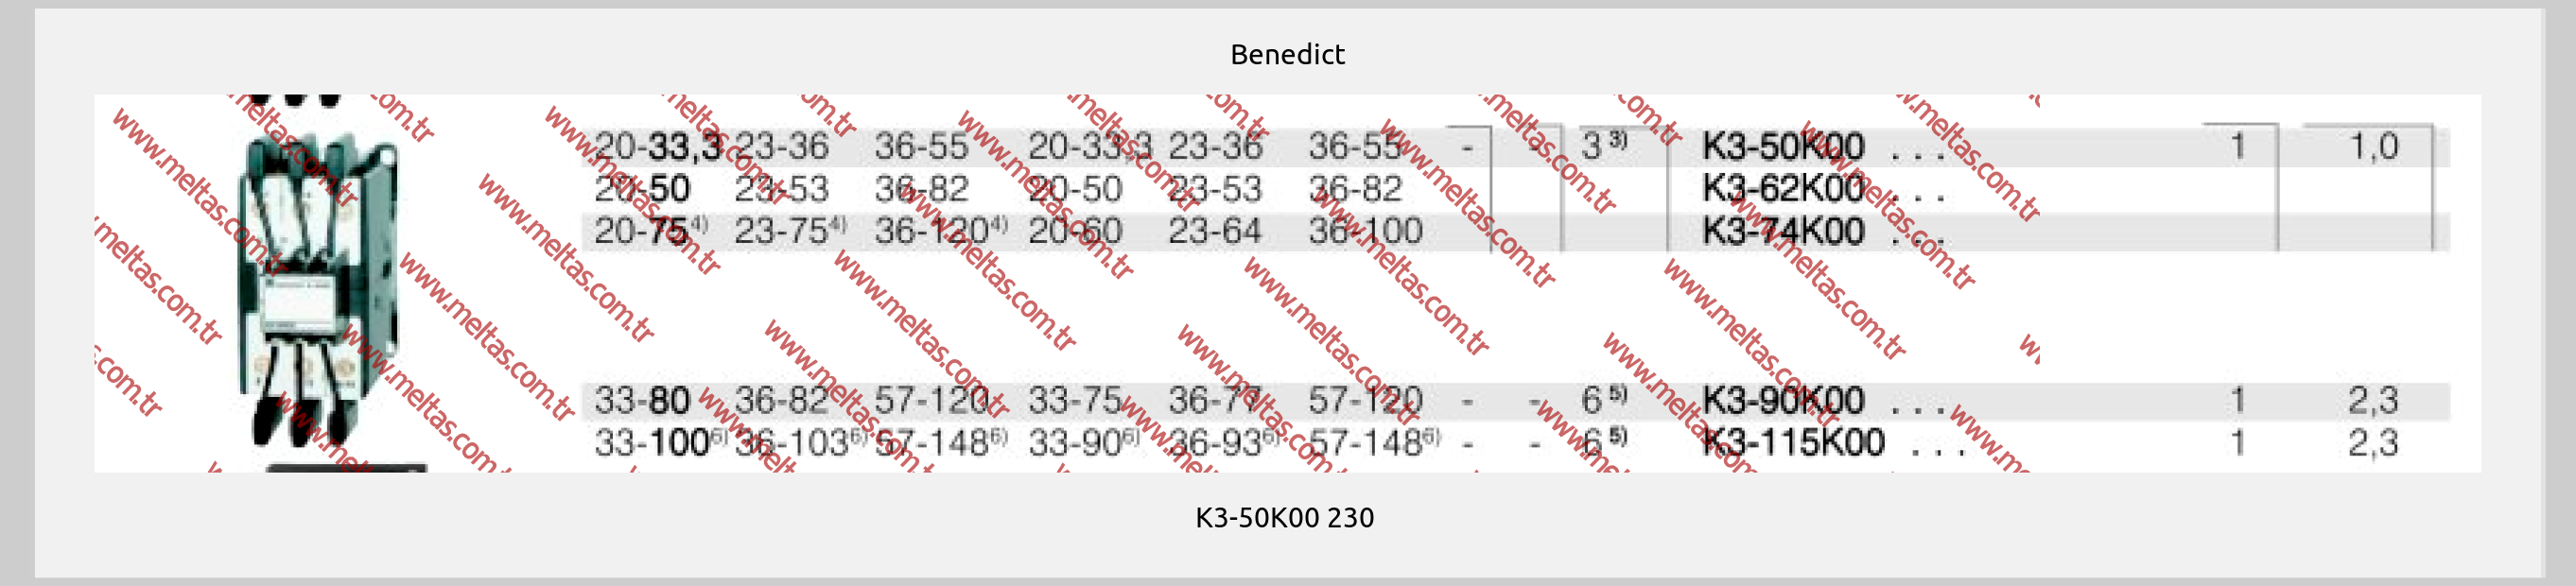 Benedict-K3-50K00 230 